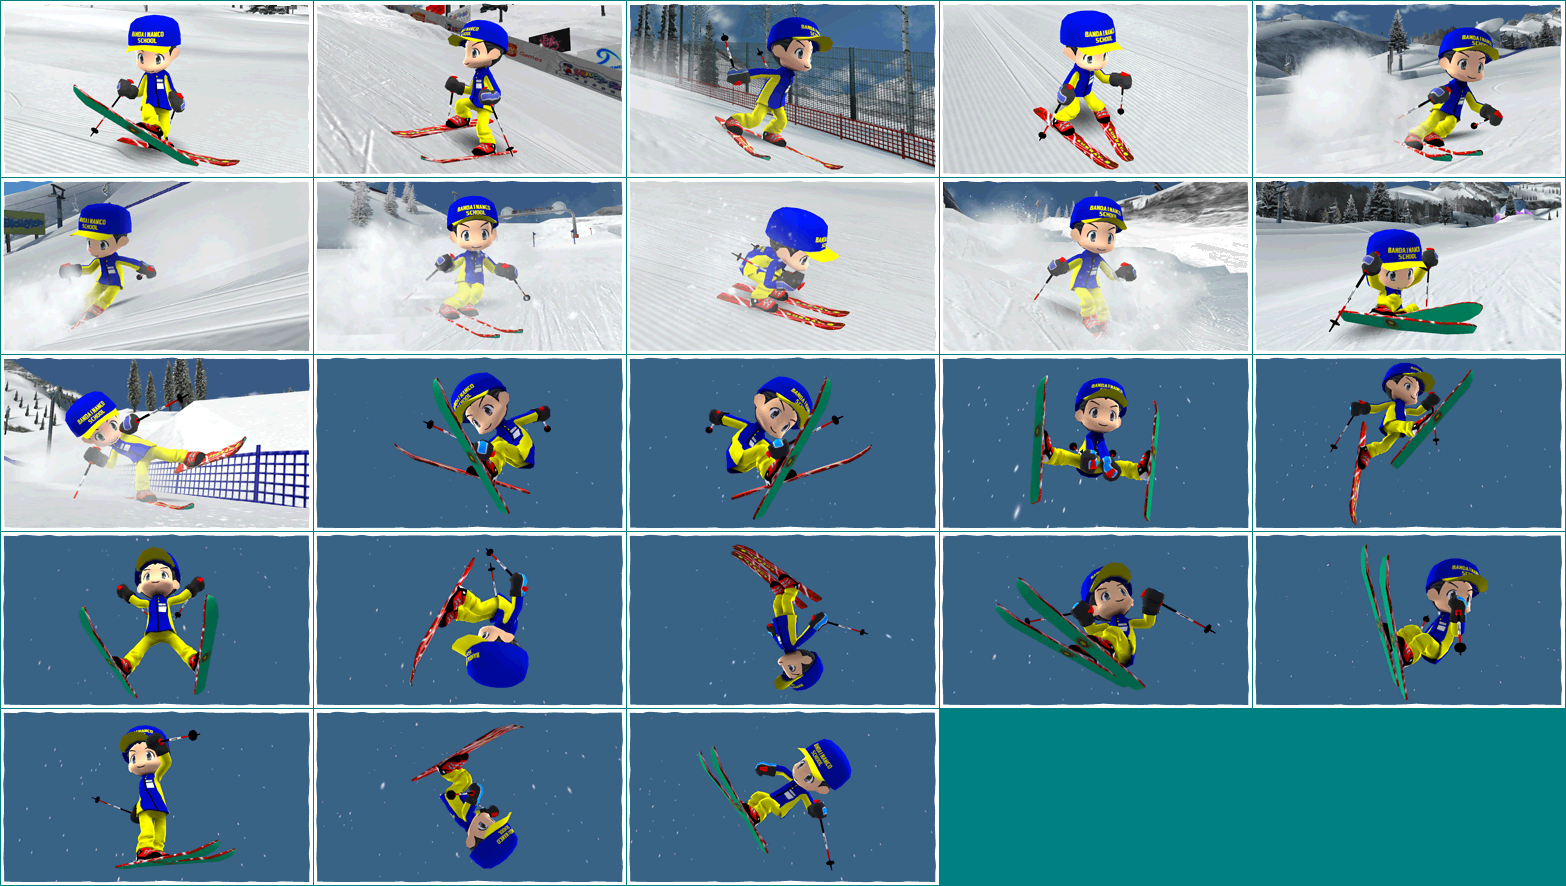 We Ski - Lesson Images